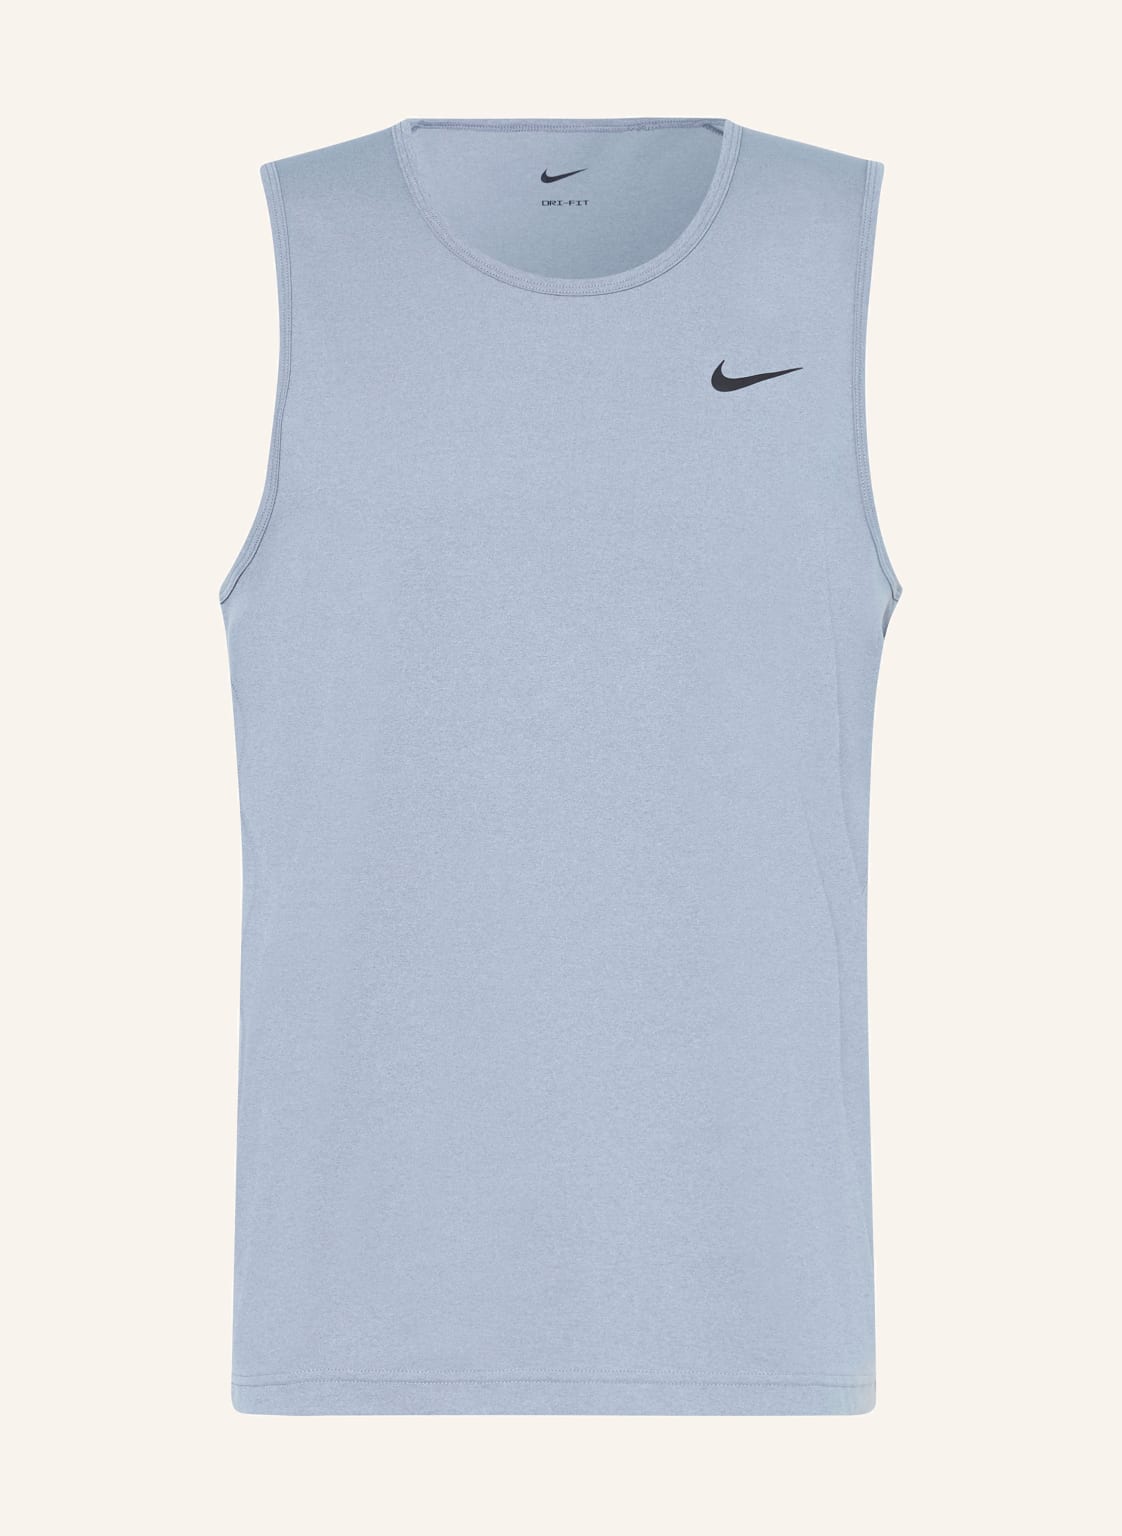 Nike Tanktop Dri-Fit Hyverse blau von Nike